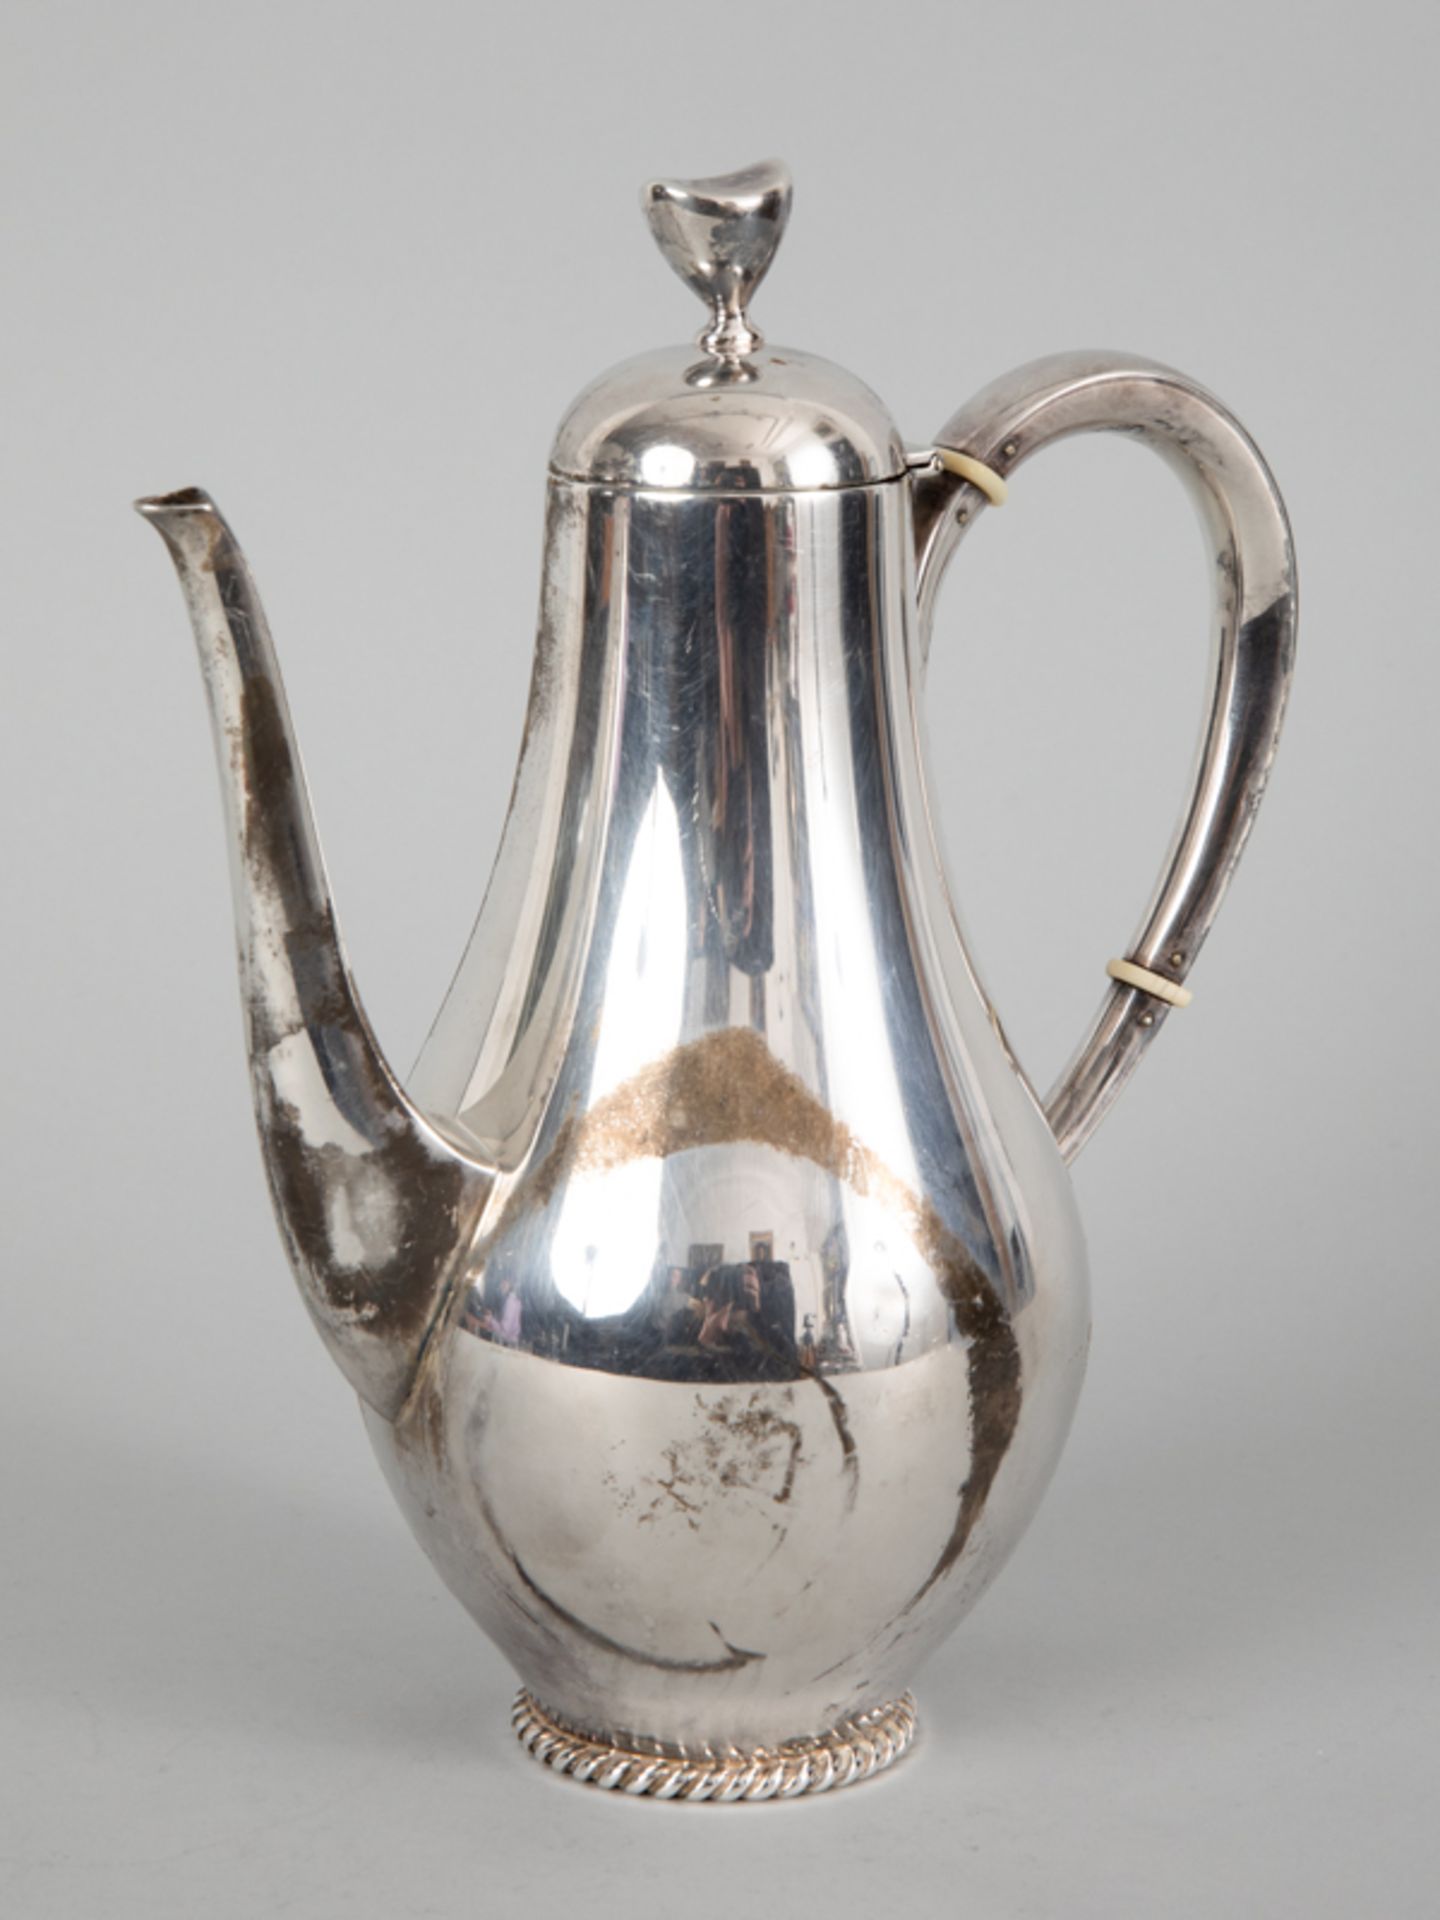 Mokkakanne, Wilkens, Bremen, 20. Jahrhundert 825/- Silber; Gewicht ca. 443 g; birnenförmiger